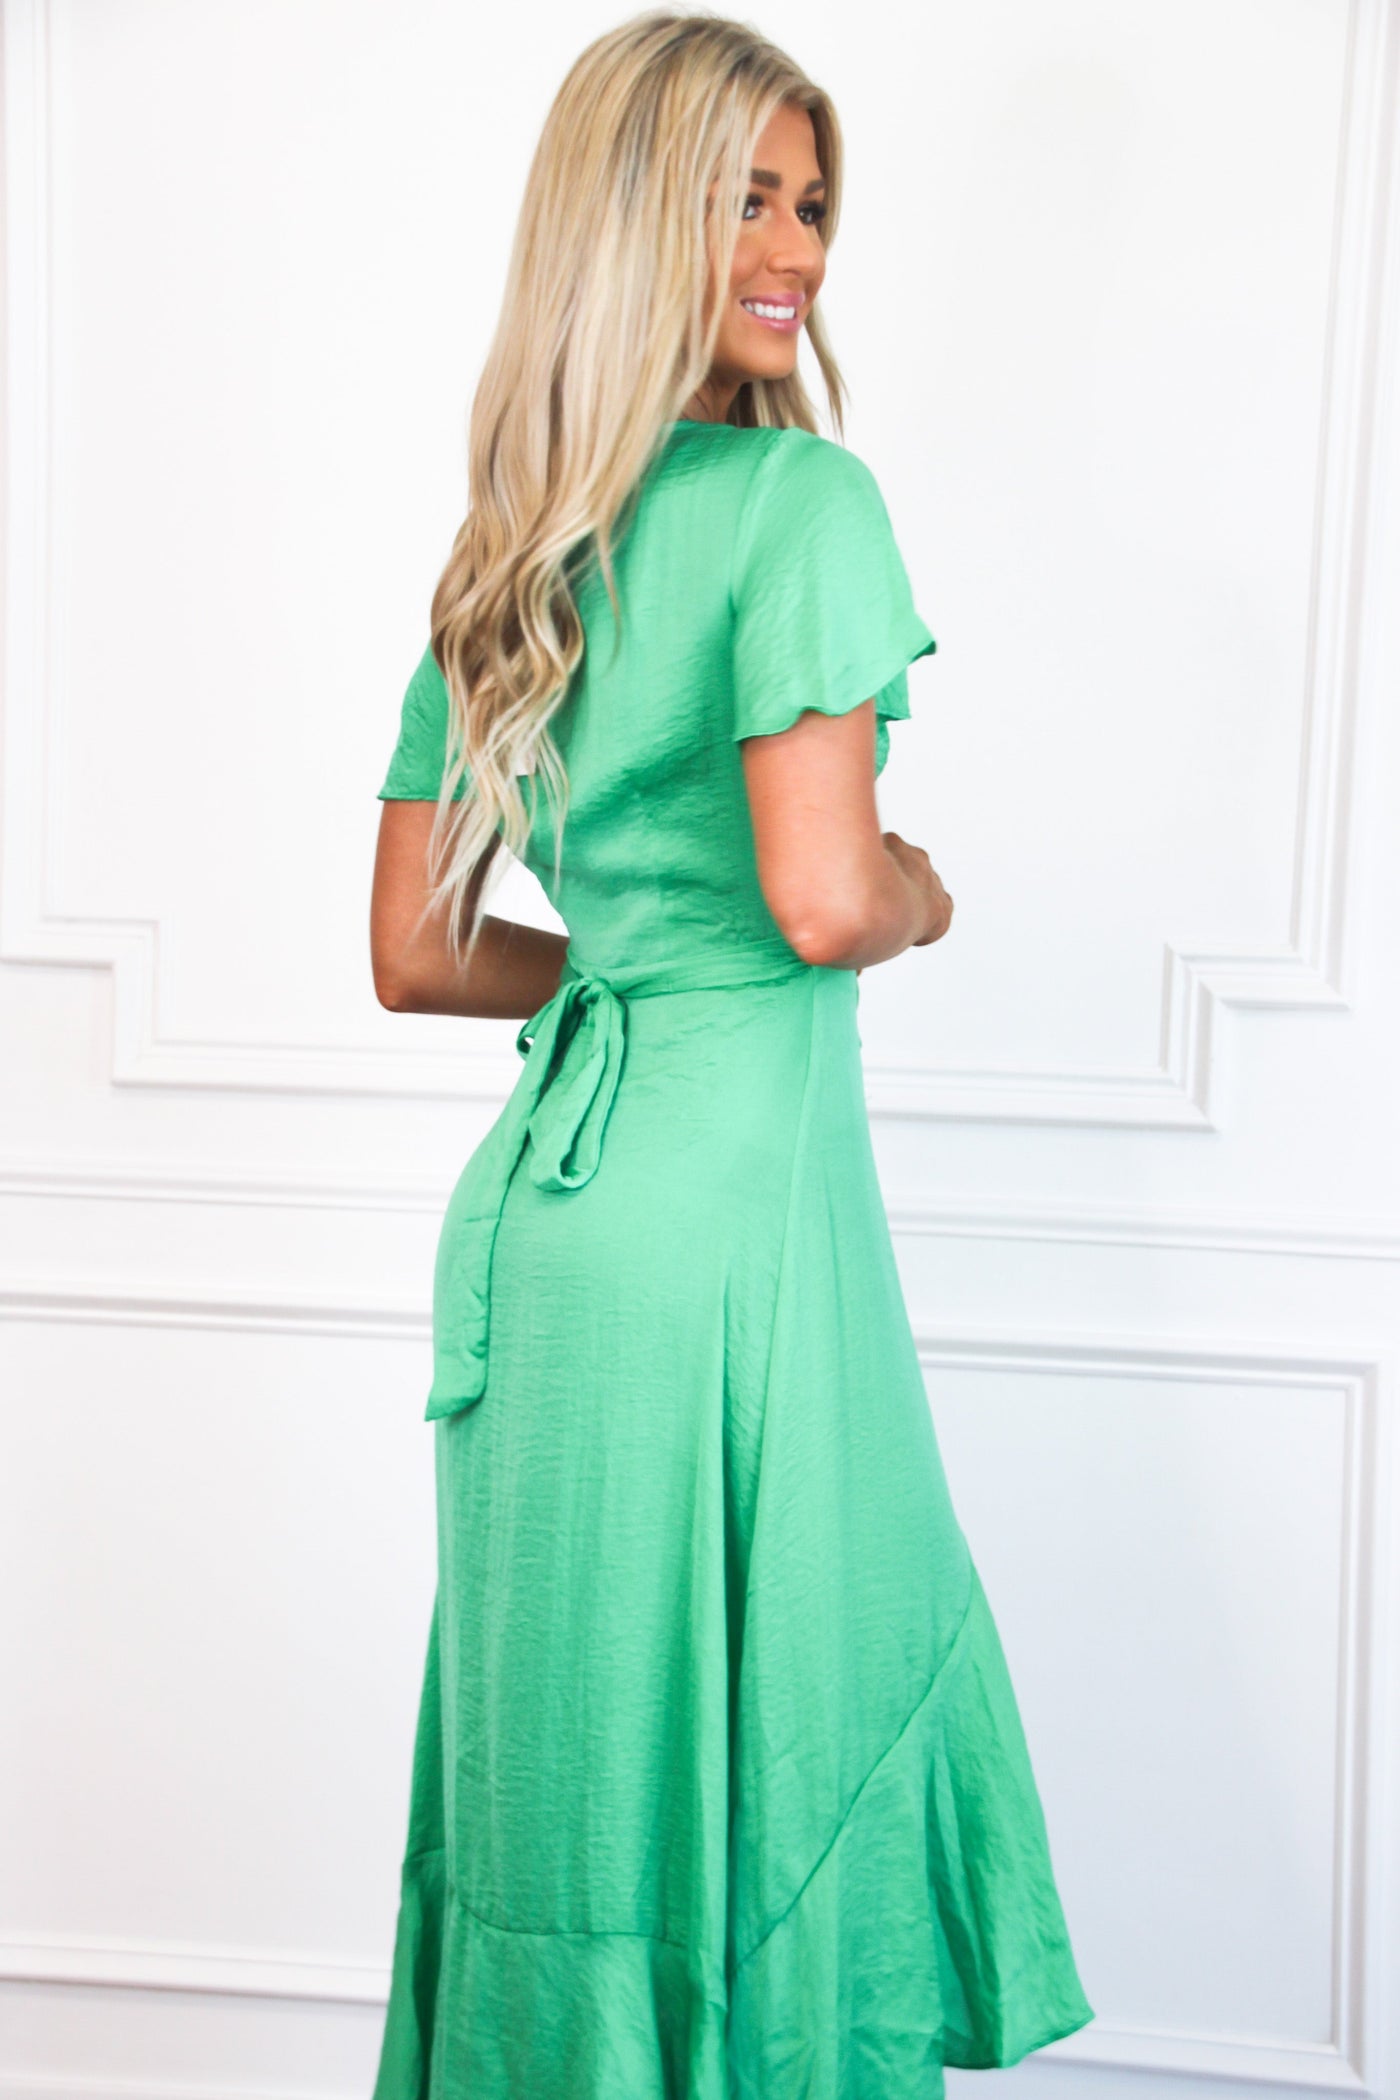 Amalfi Coast Satin Maxi Dress: Kelly Green - Bella and Bloom Boutique